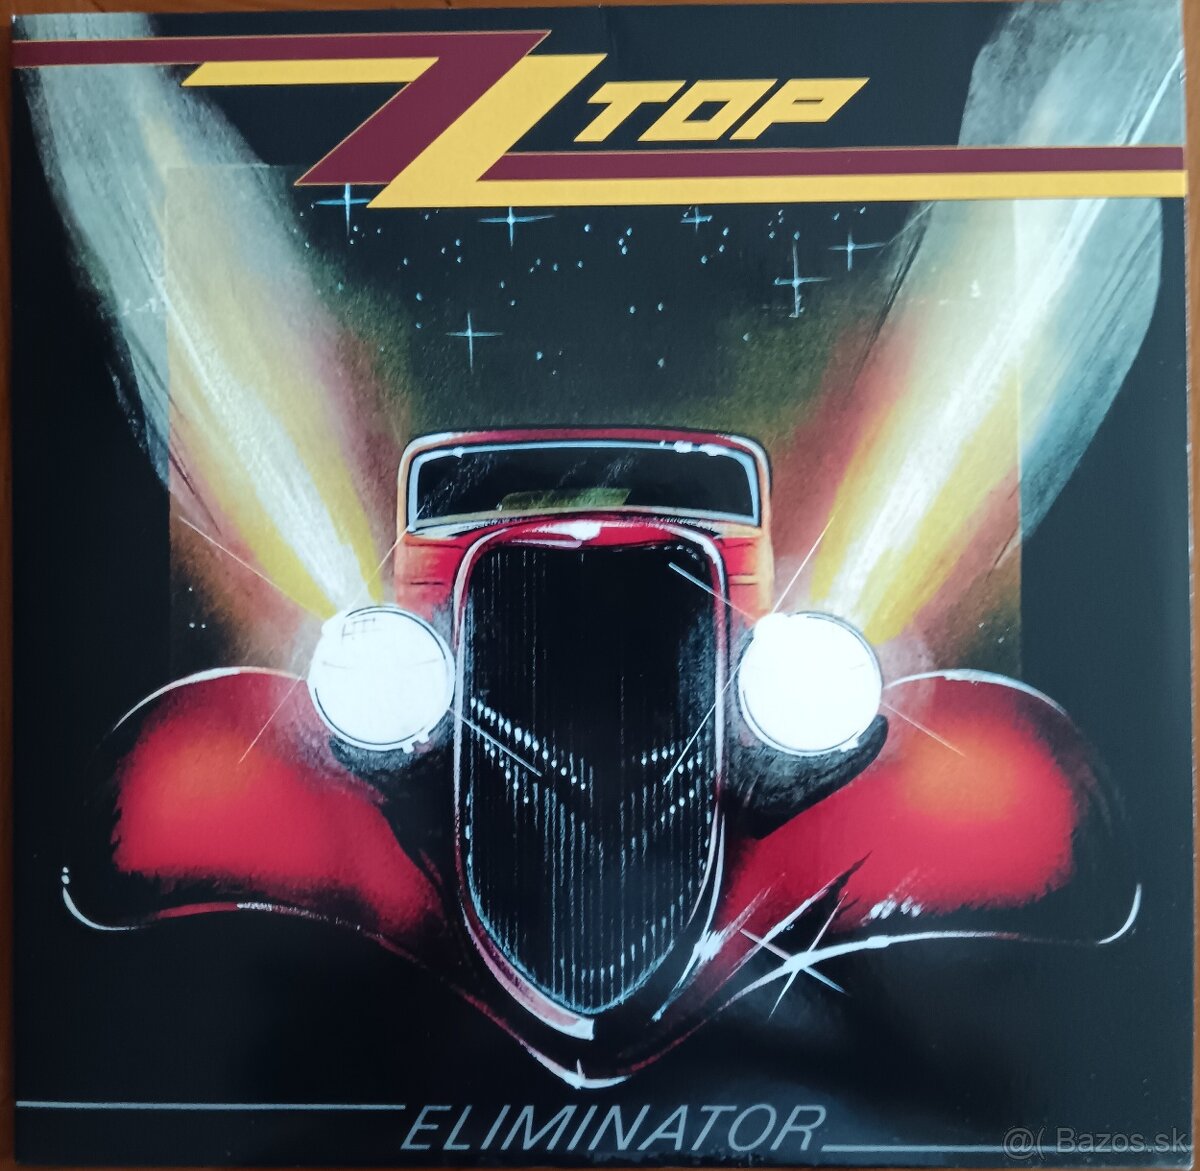 LP vinyl ZZ TOP Eliminator